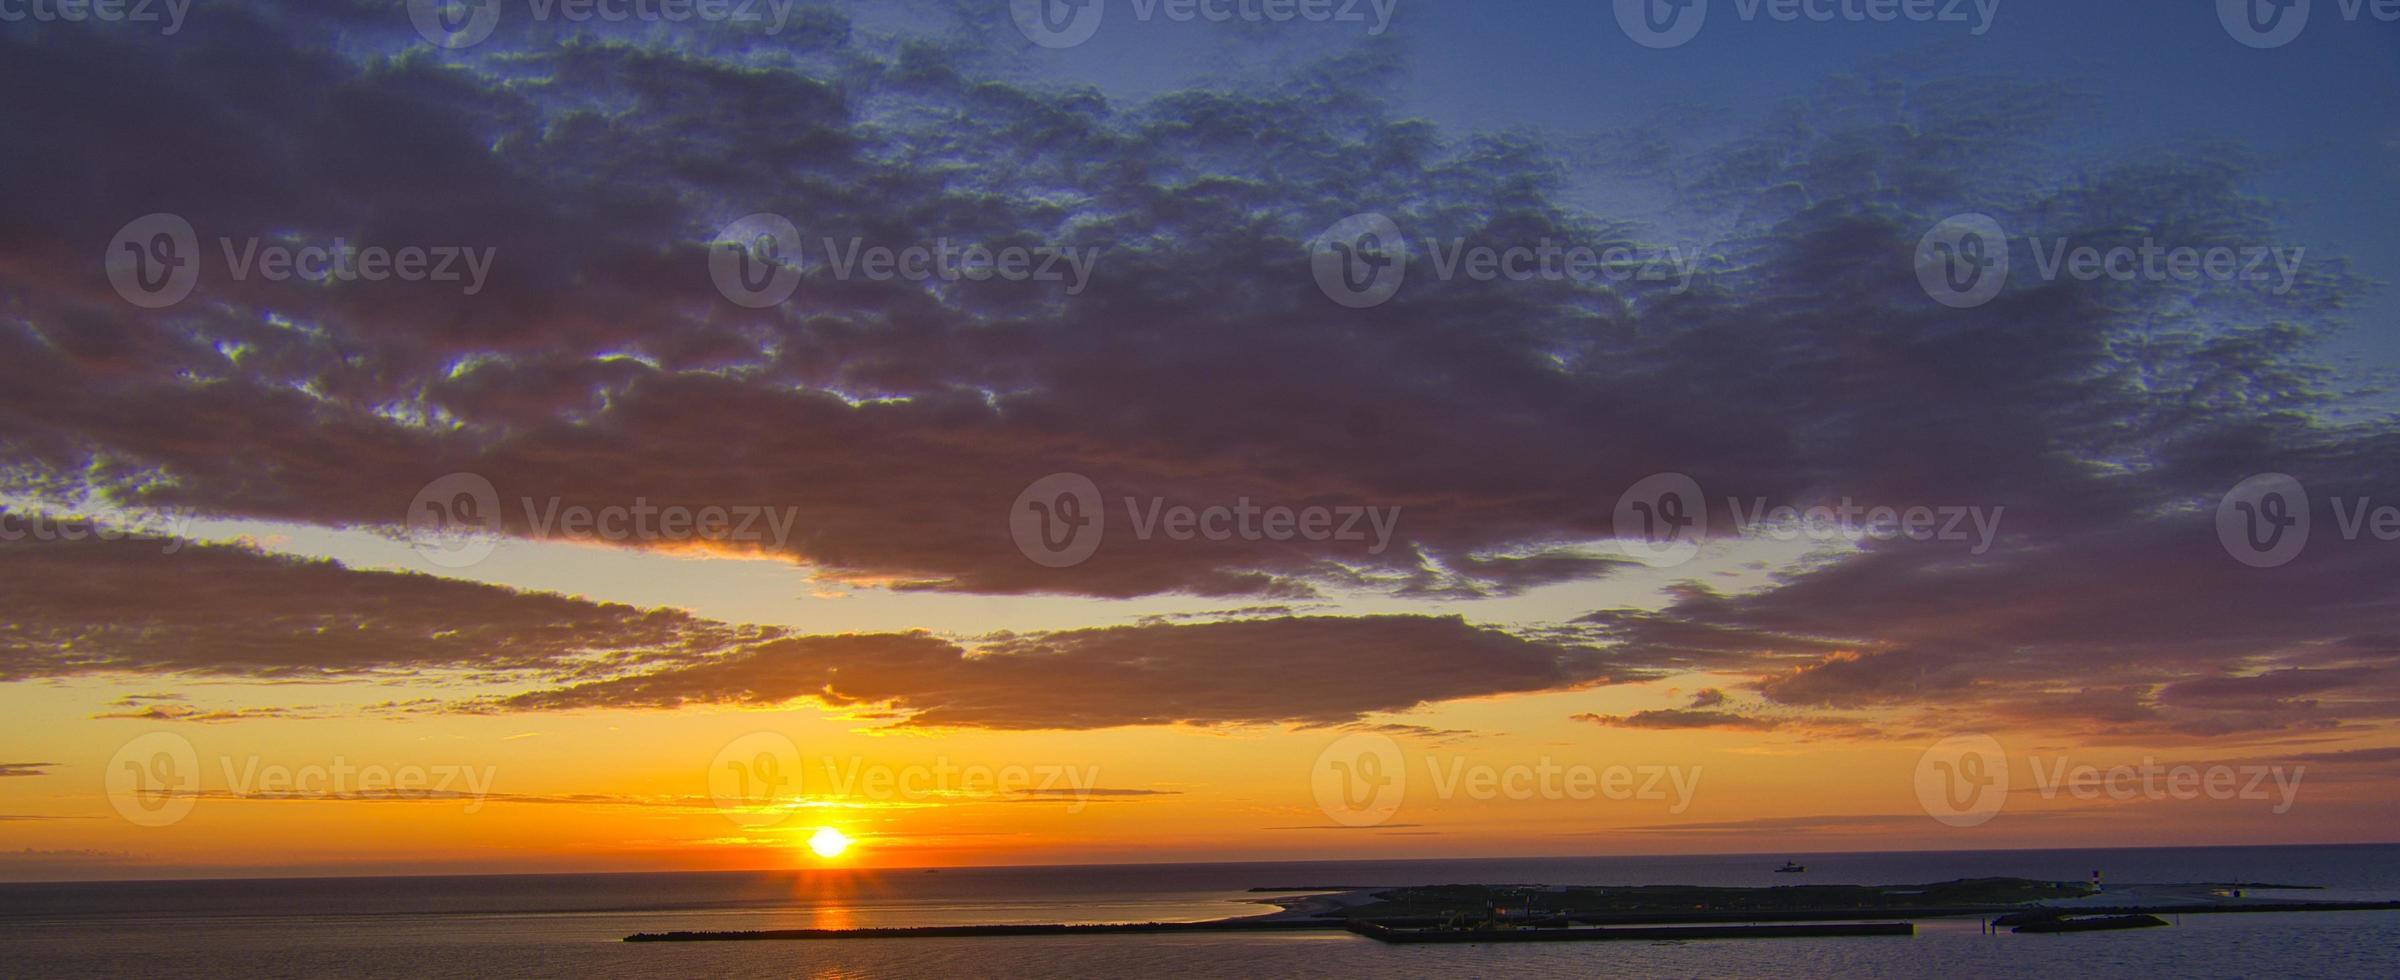 heligoland - eilandduin - zonsopgang foto